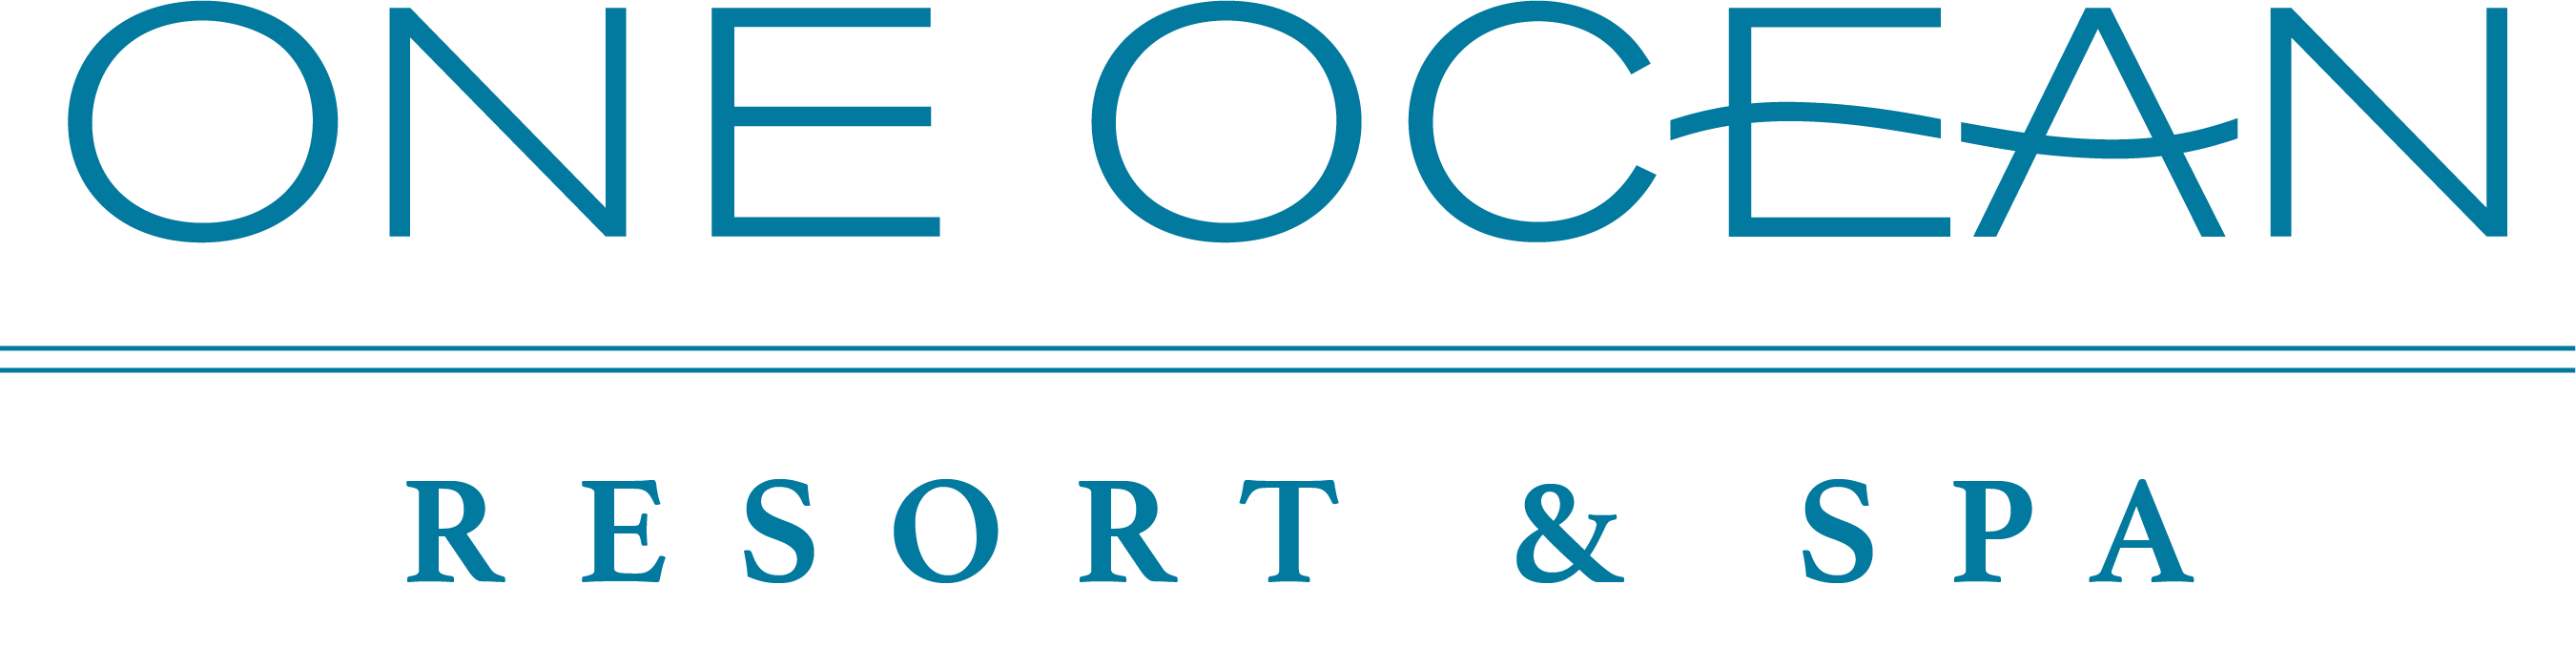 One Ocean Resort and Spa Logo